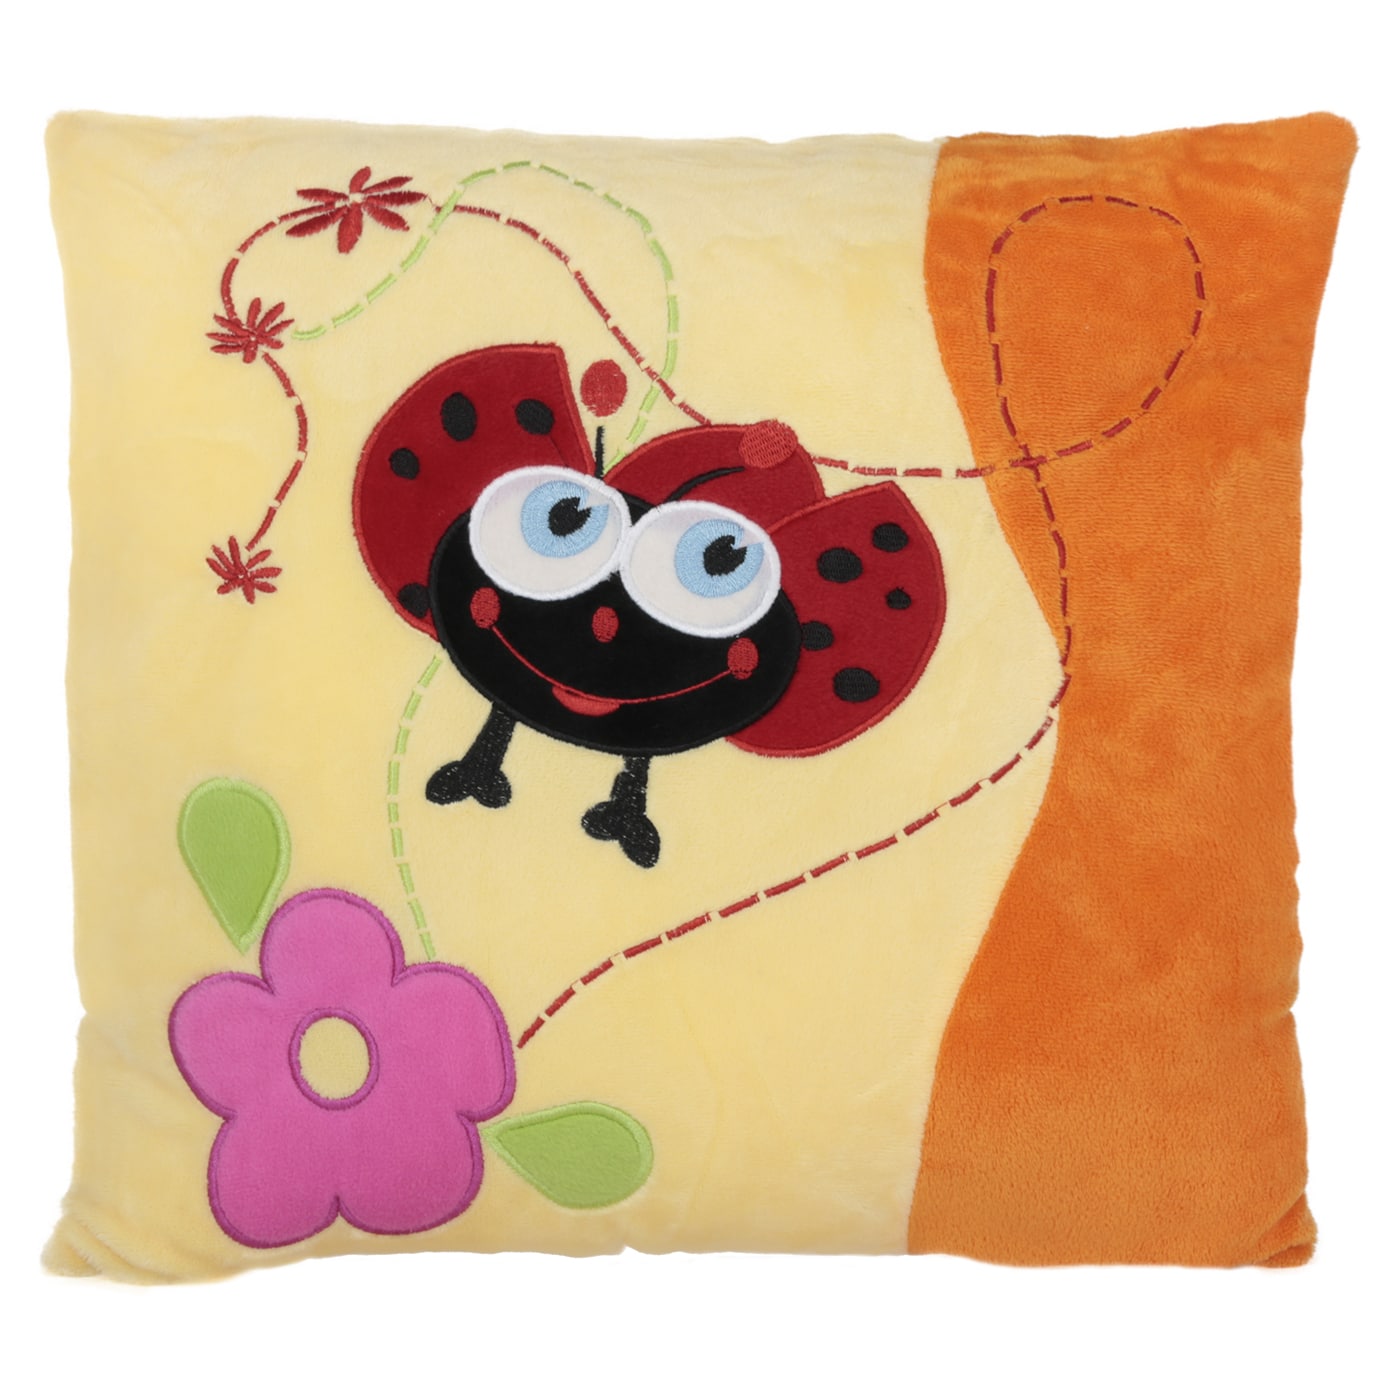 Pillow with ladybug